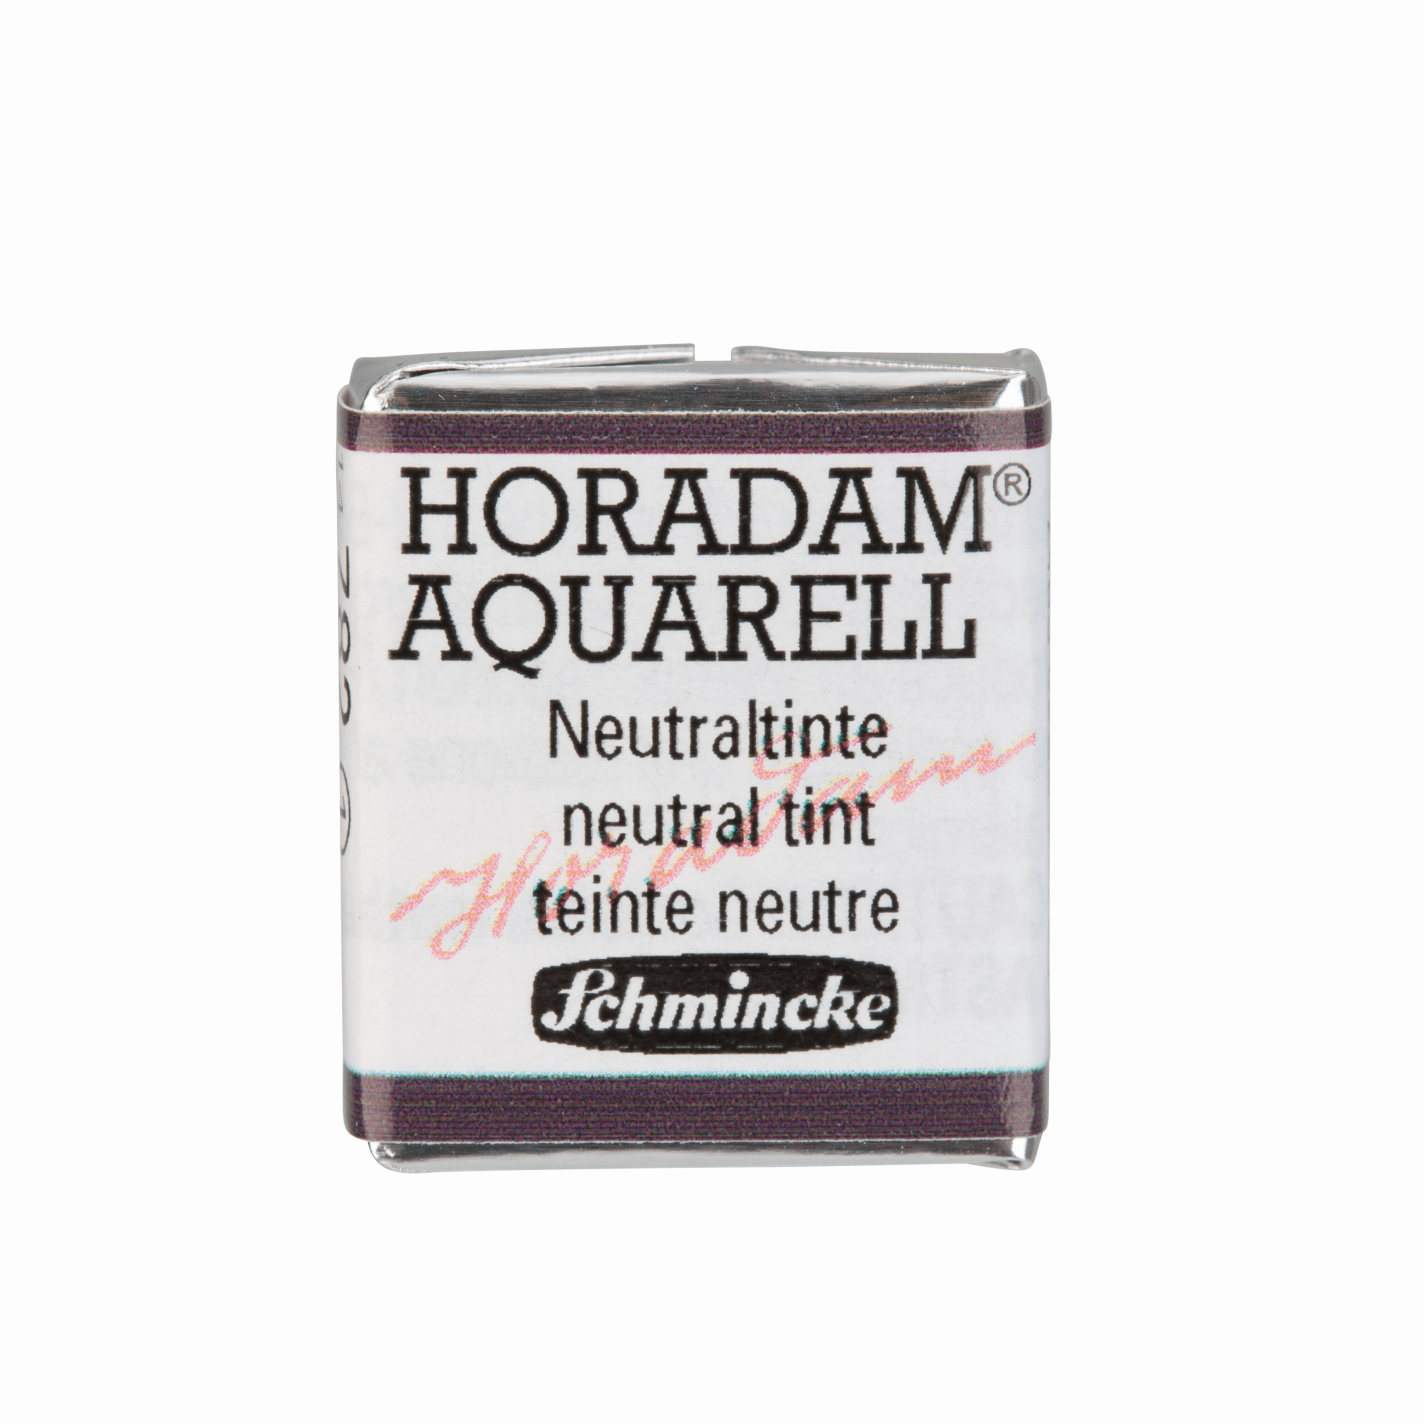 Schmincke Horadam Aquarell pans 1/2 pan Neutral Tint